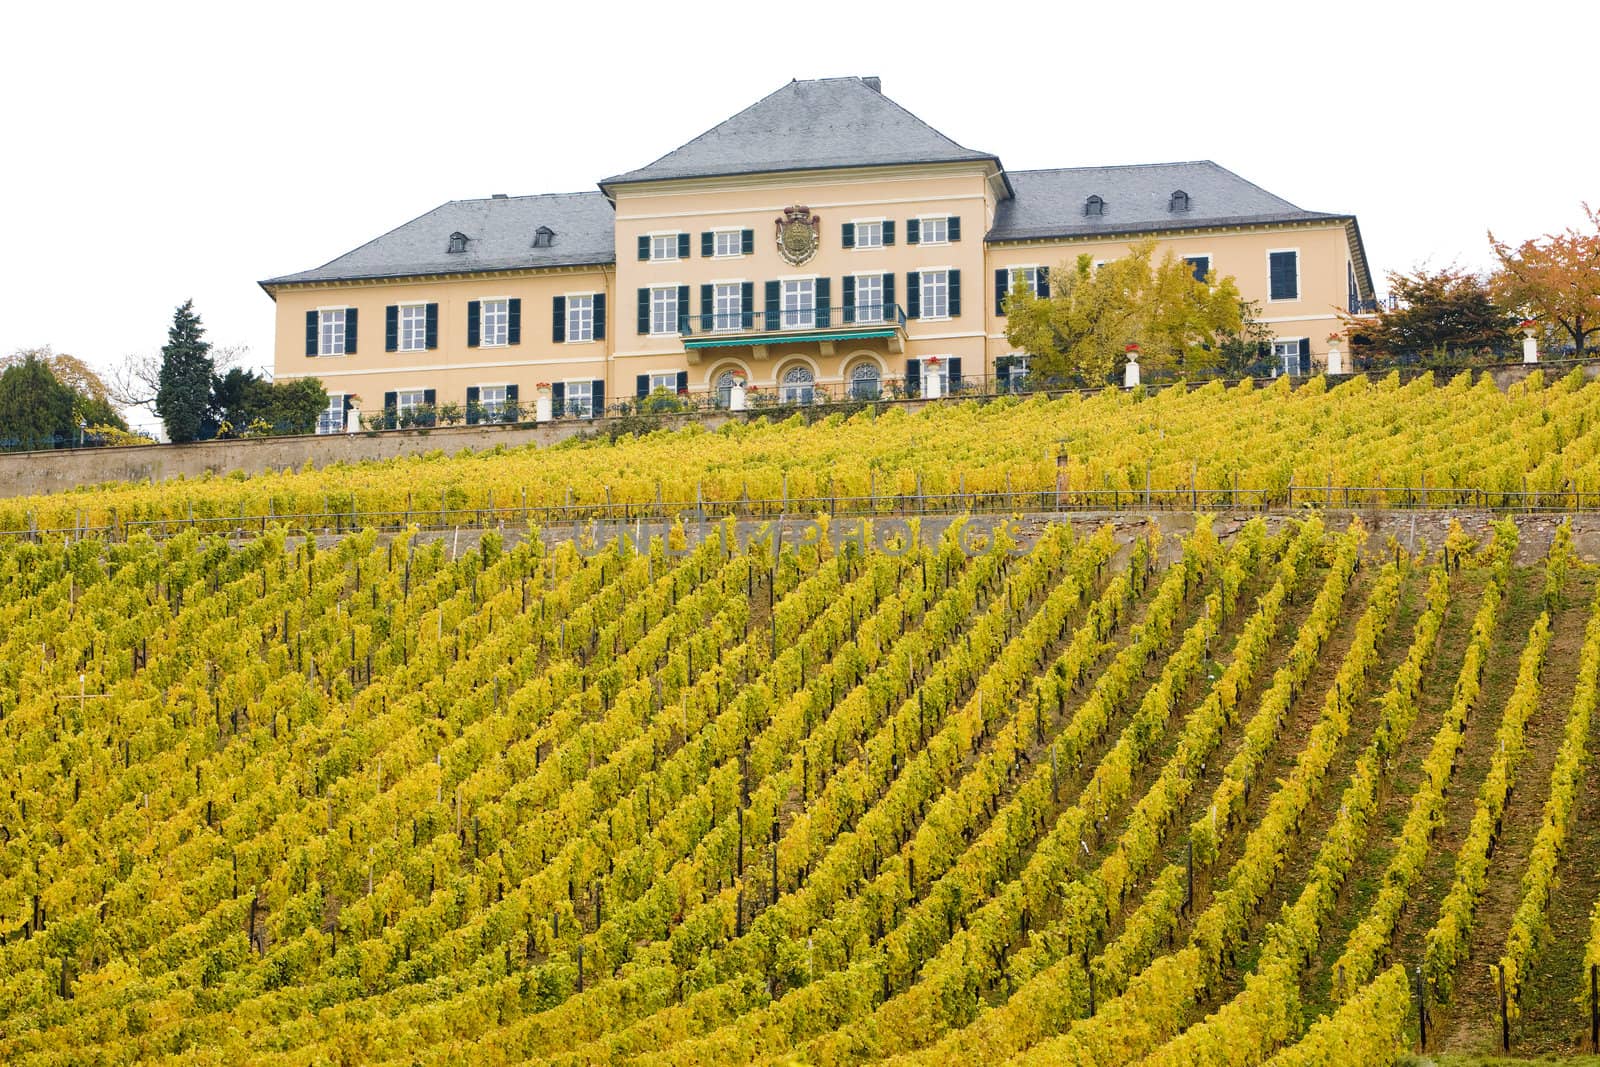 Johannisberg Castle with vineyard, Hessen, Germany